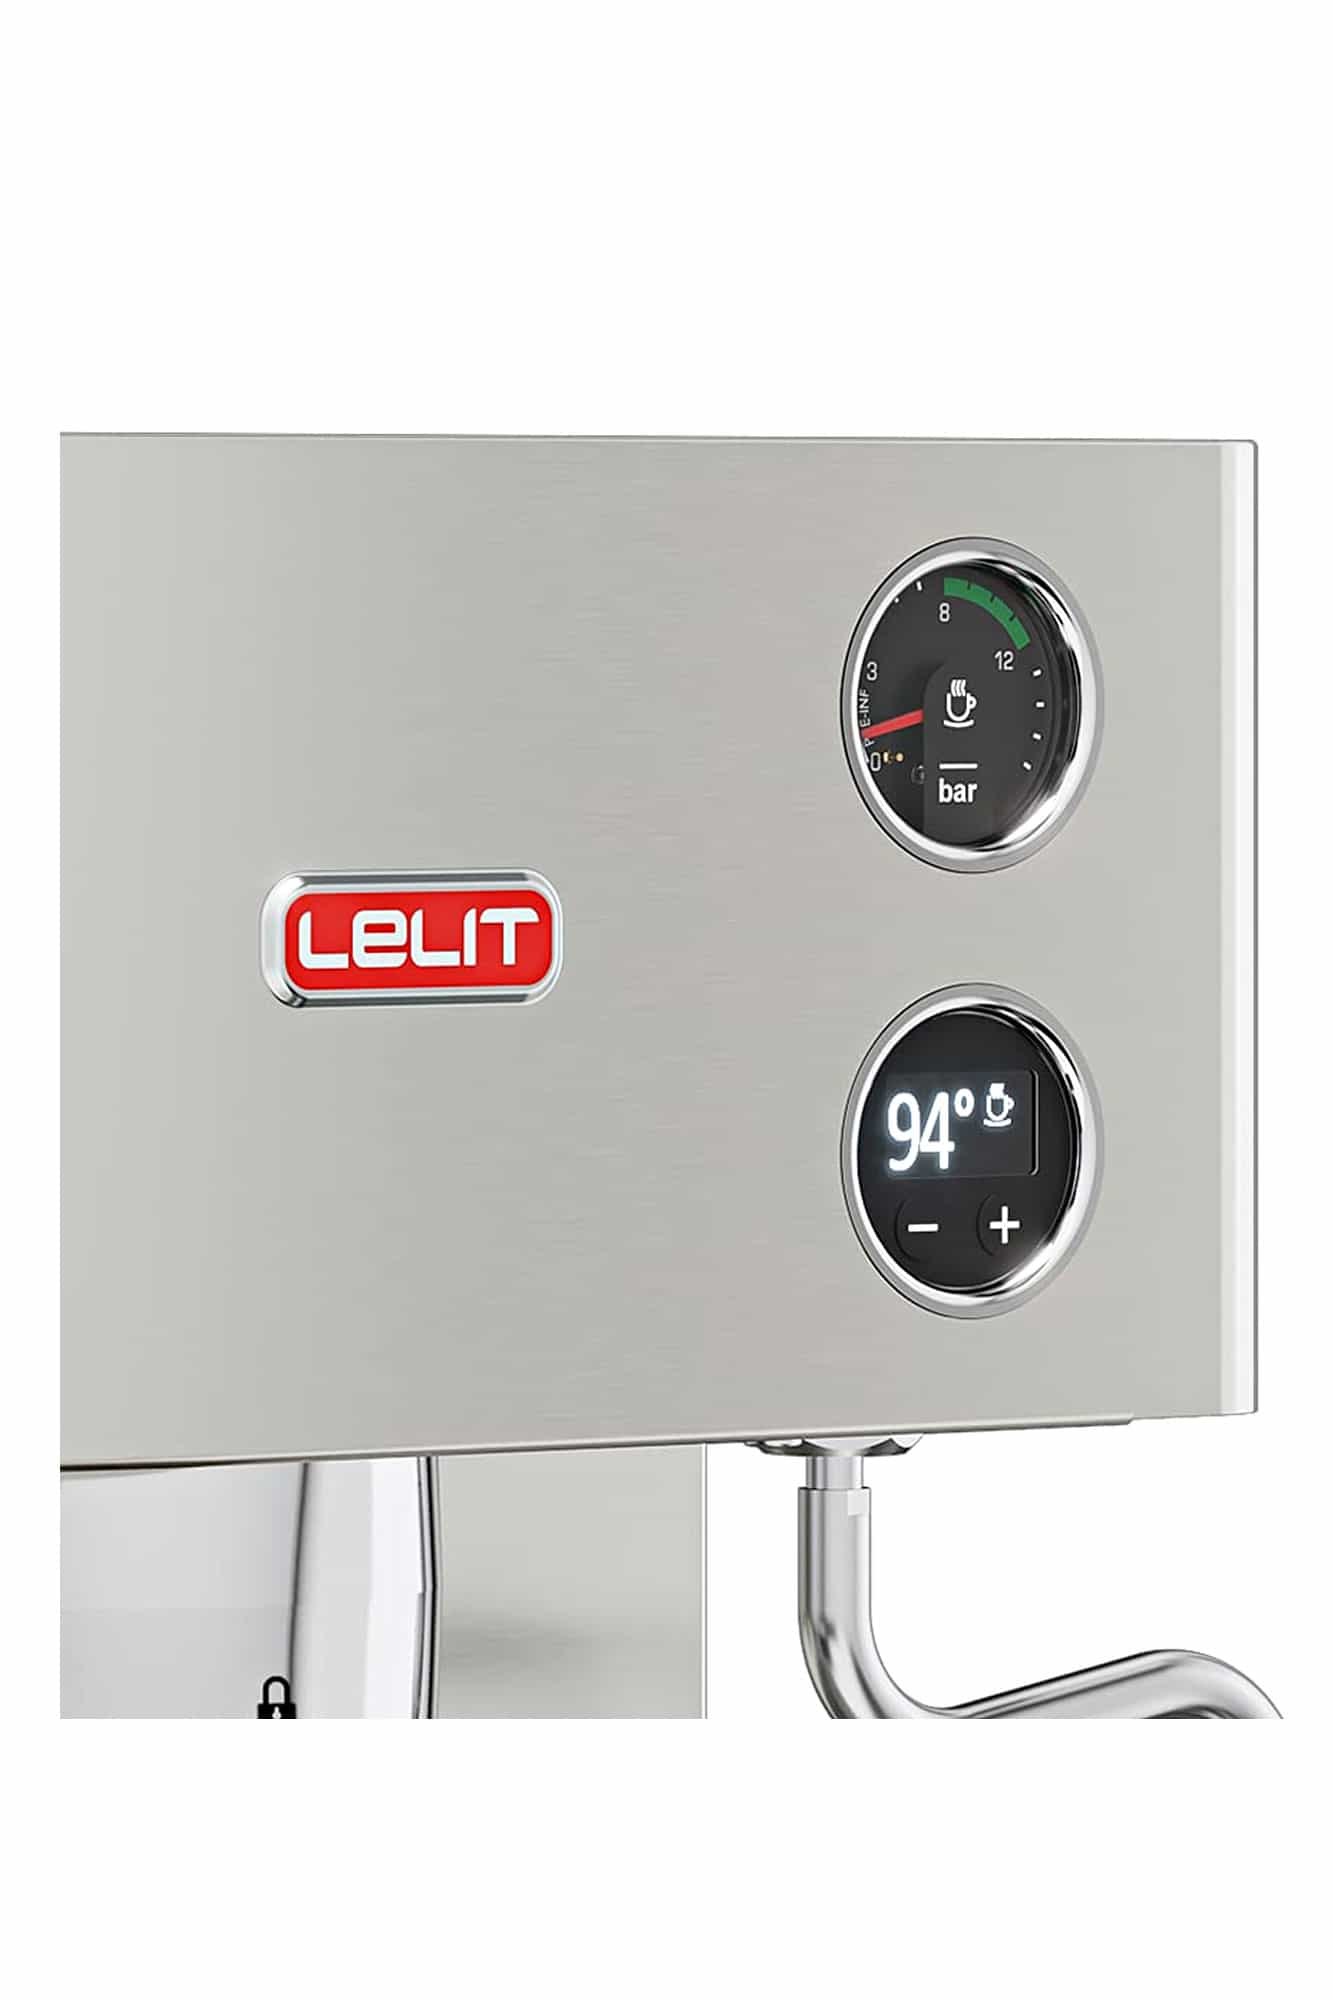 Lelit Elizabeth PL92T Dualboiler Siebträgermaschine Manometer